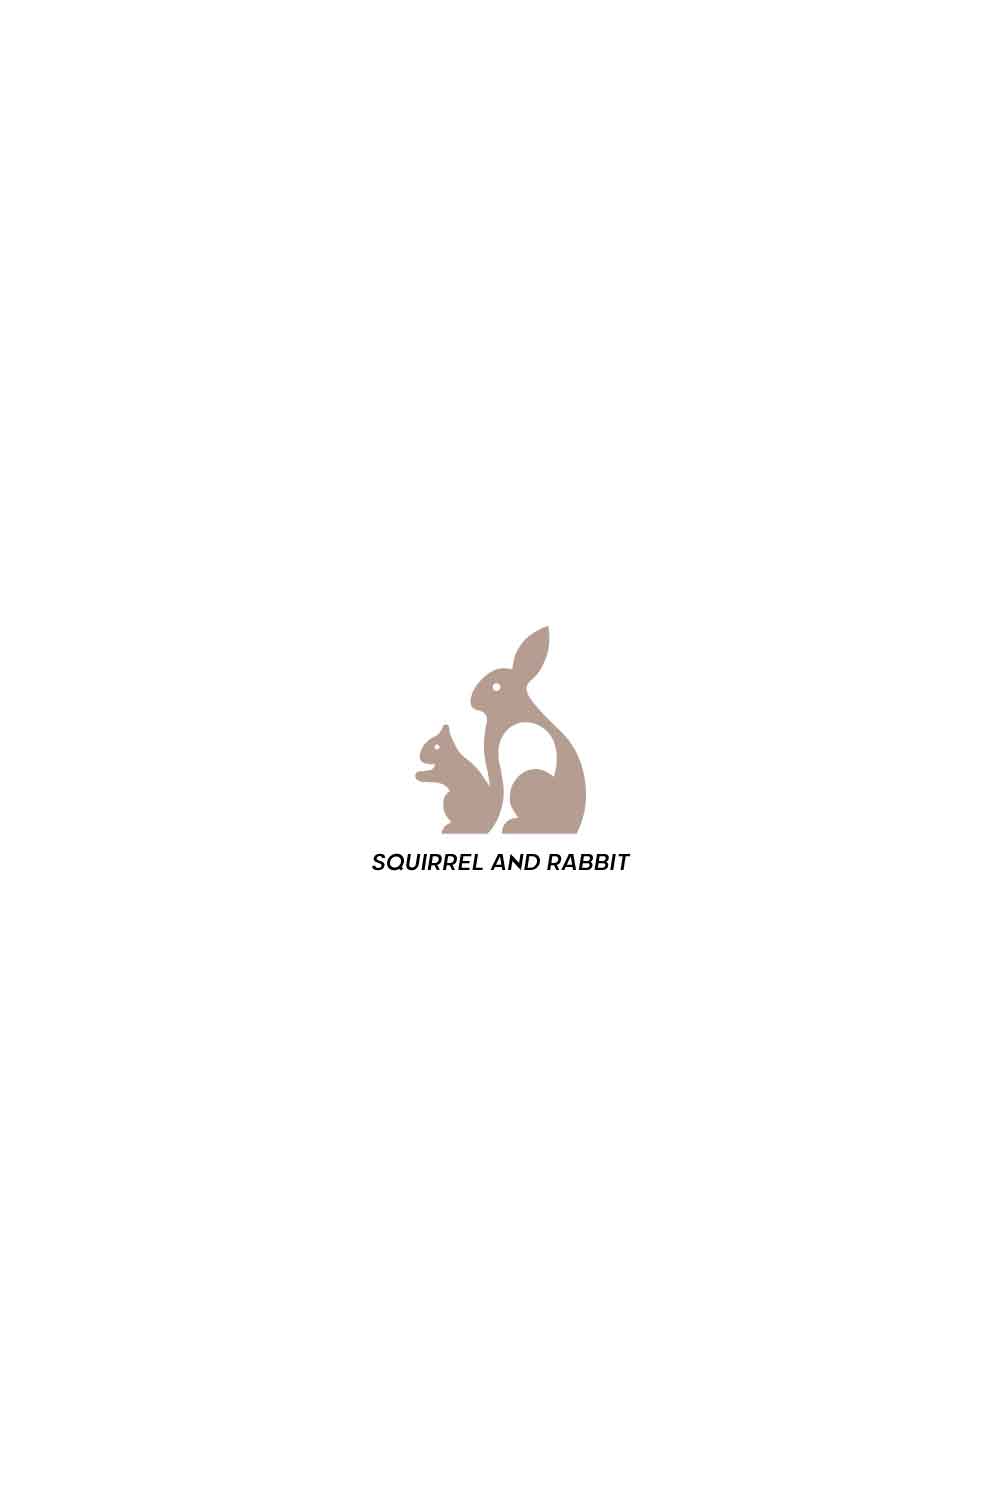 Squirrel and Rabbit Logo Pinterest collage image.